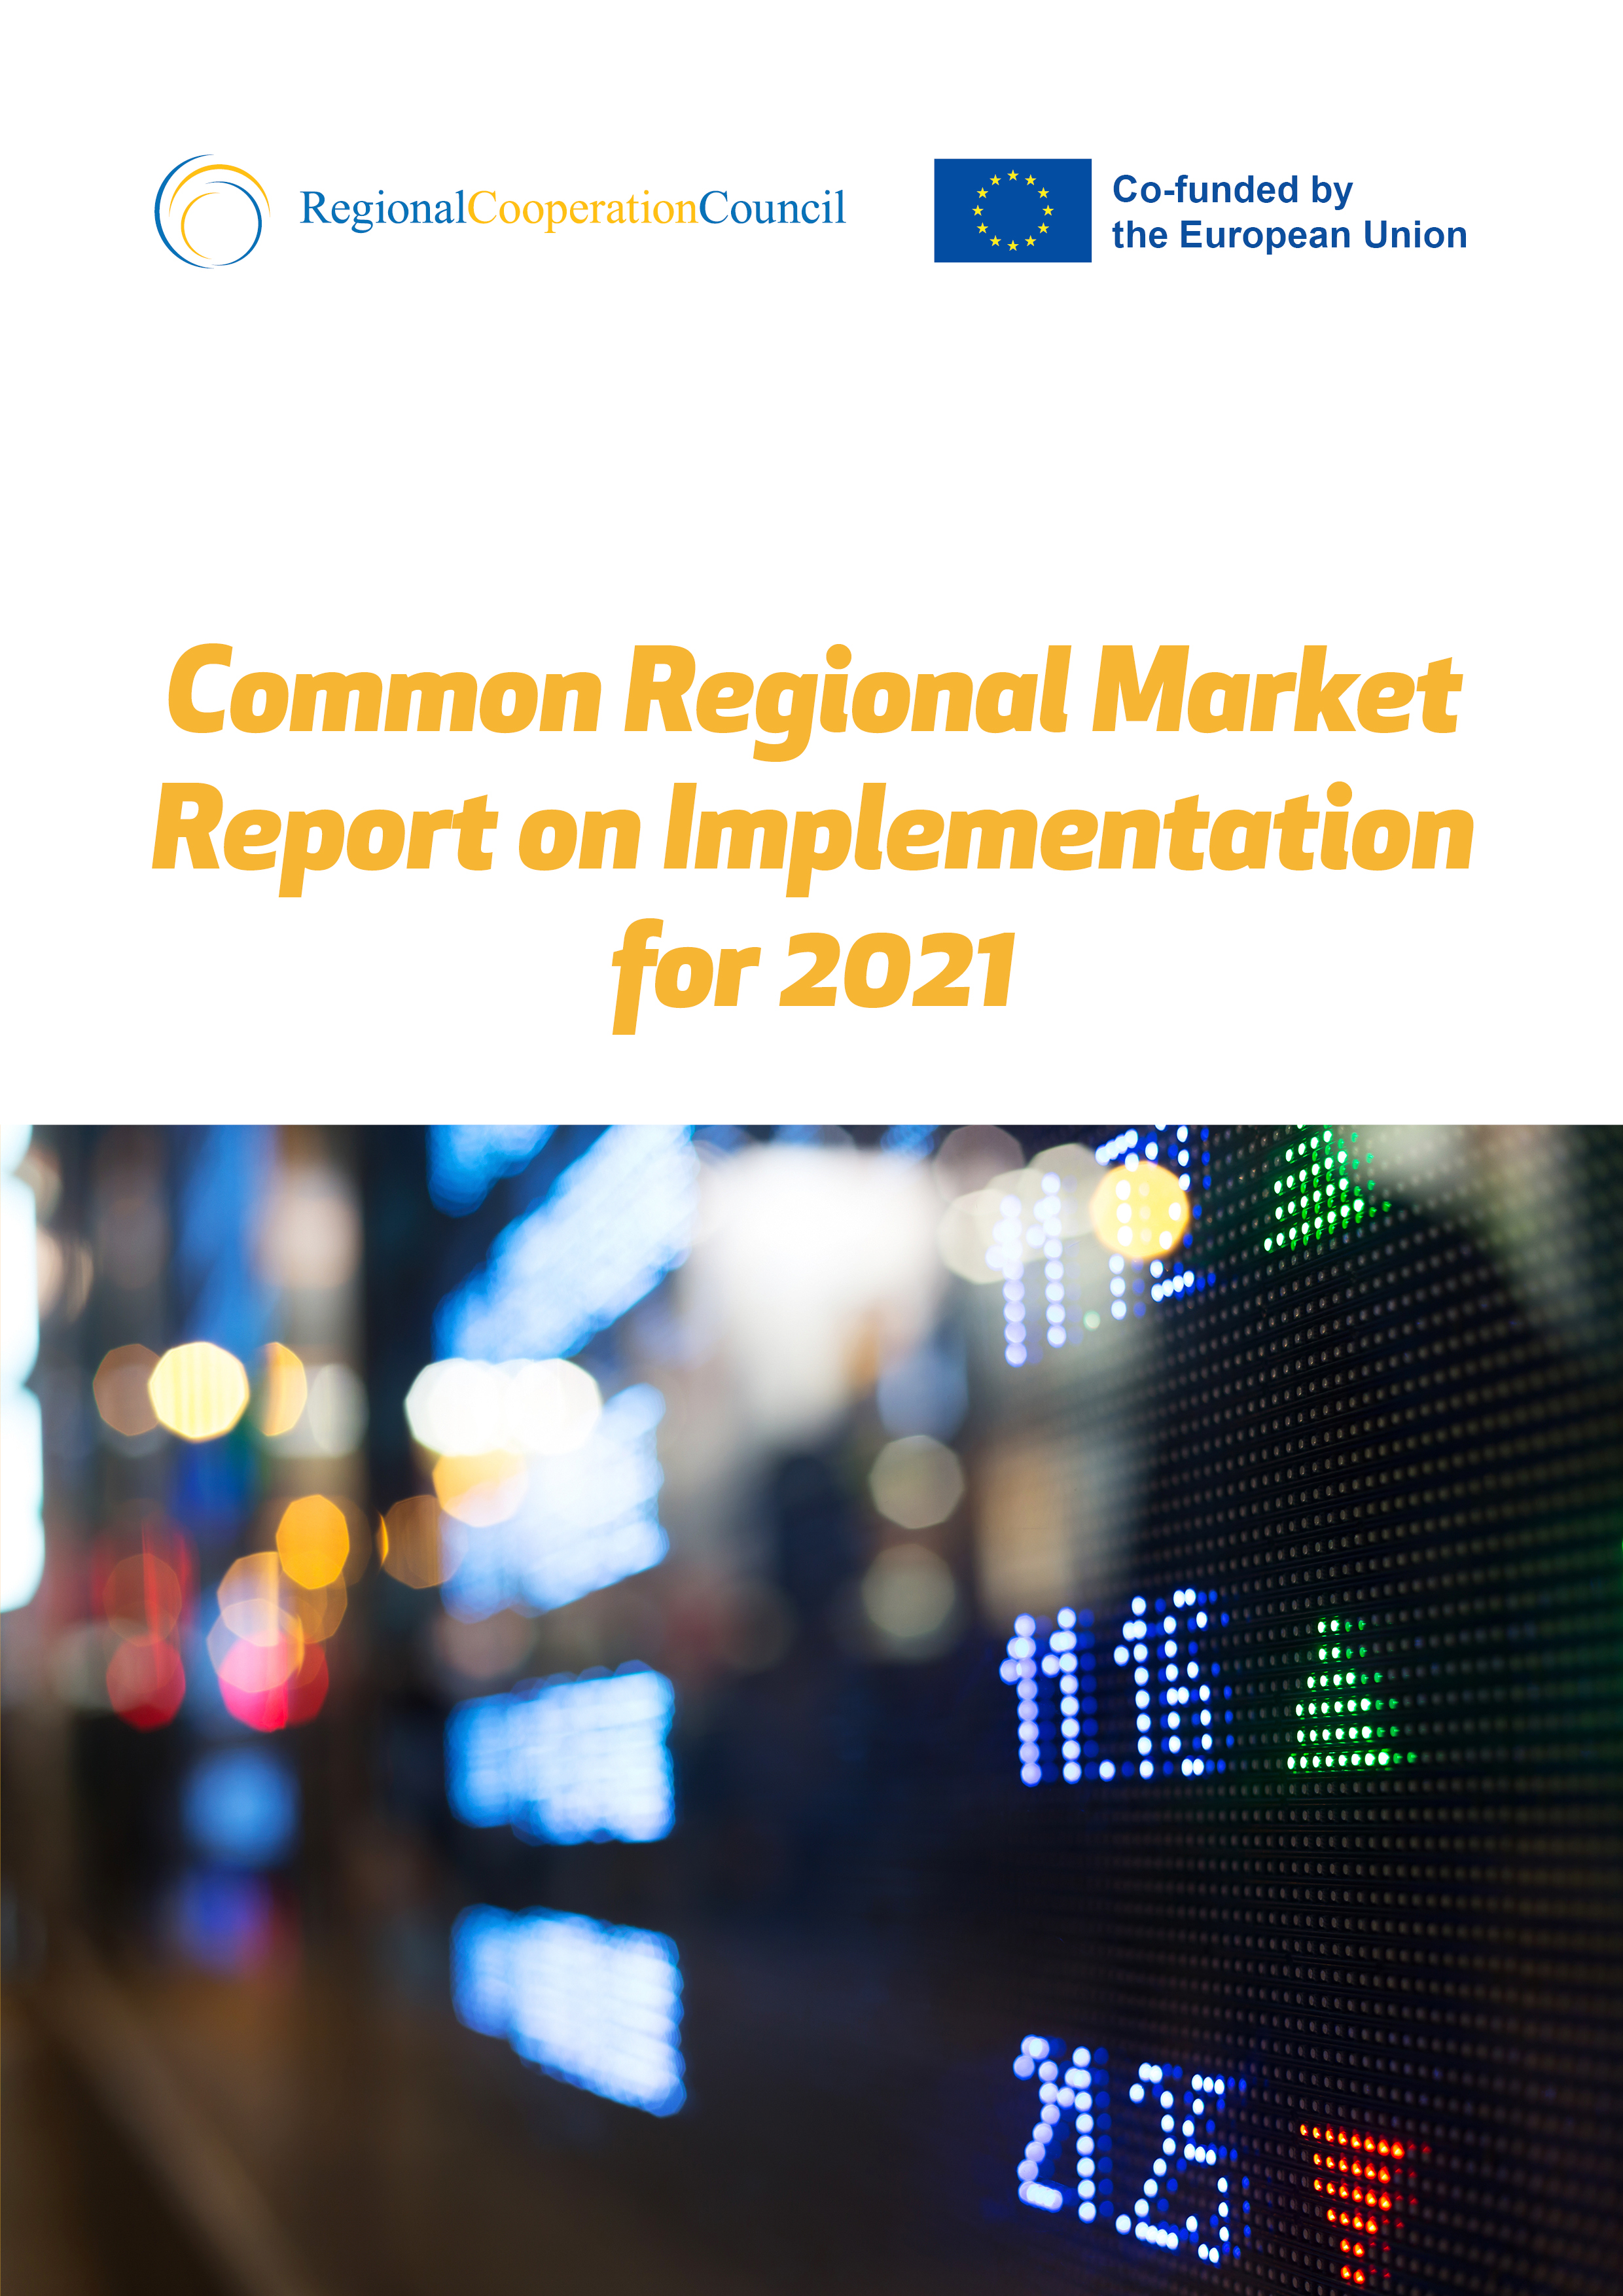 Common Regional Market Report on Implementation for 2021